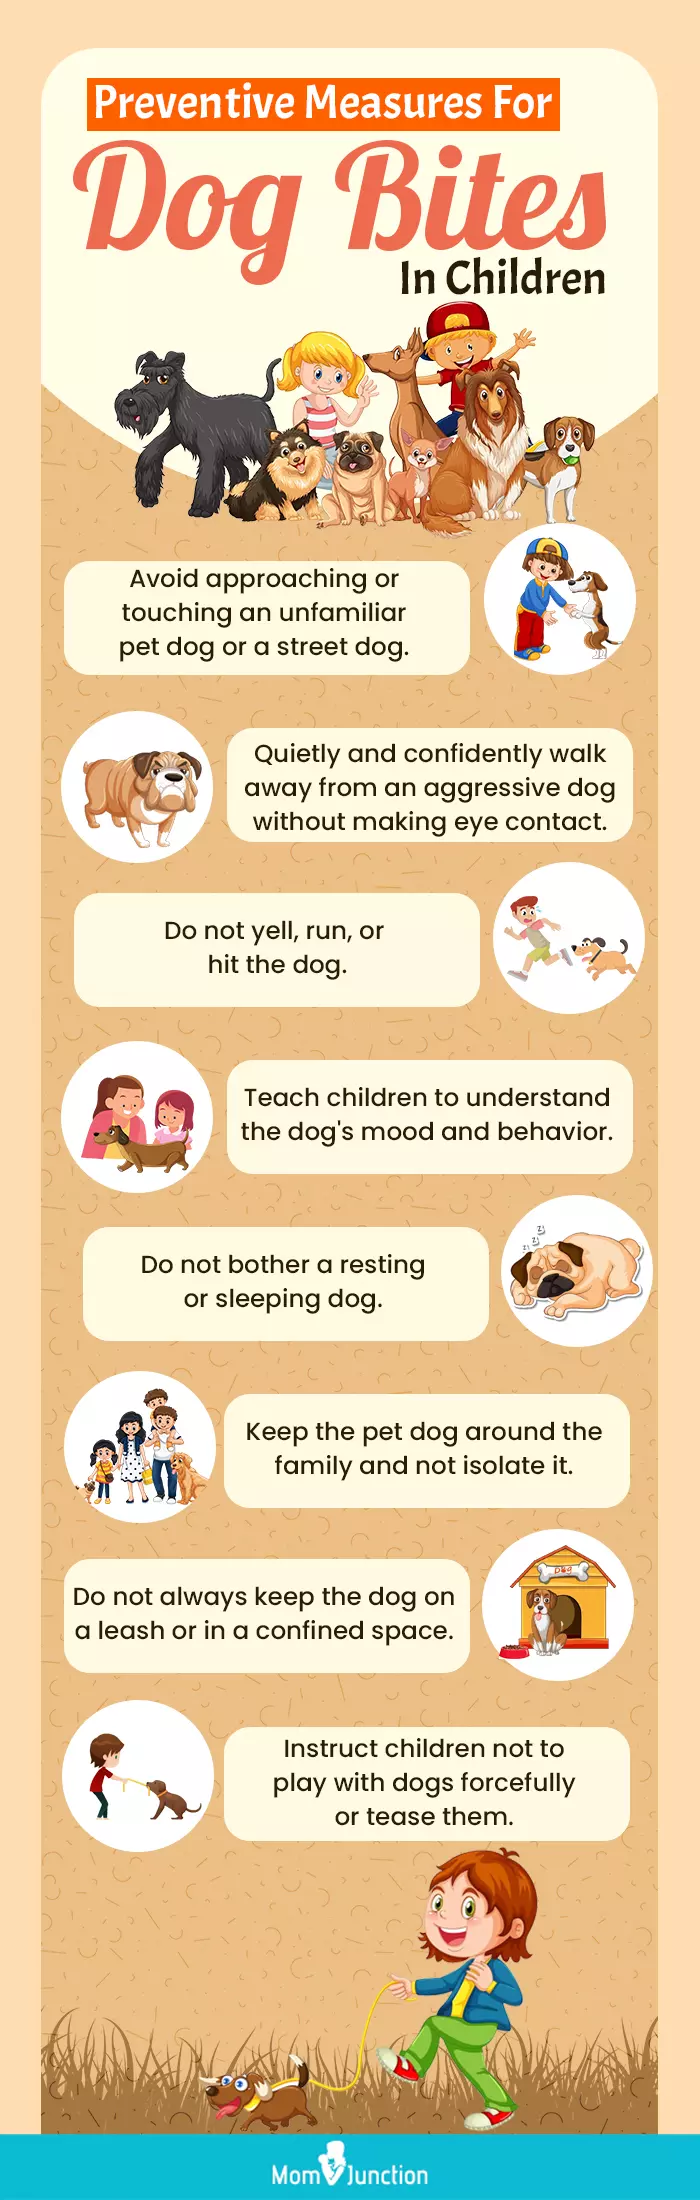 preventive measures for dog bites in children (infographic)